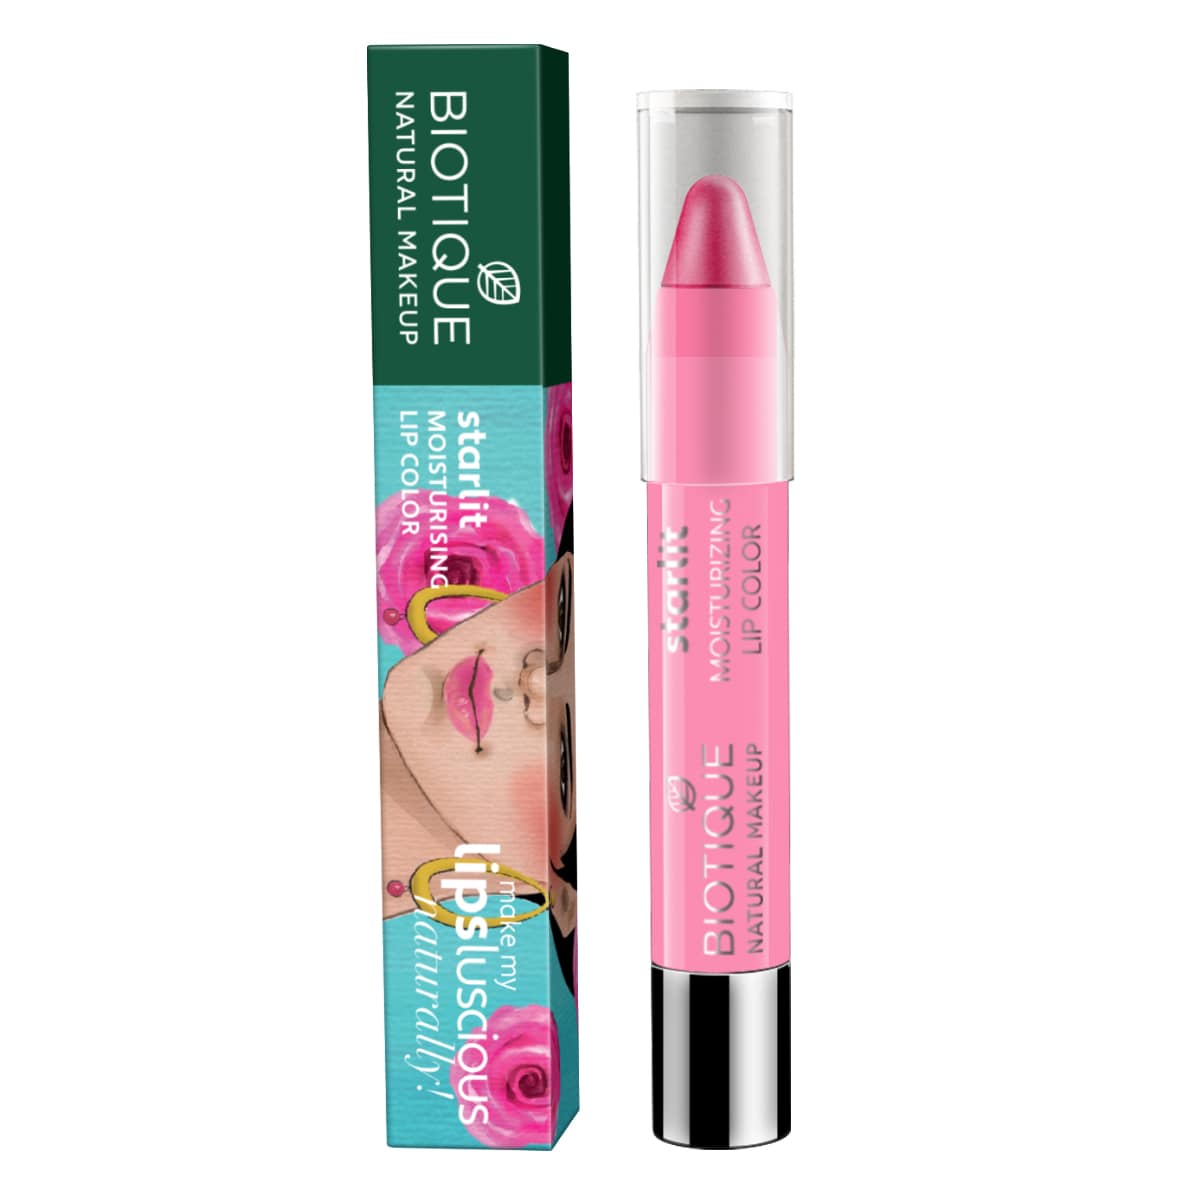 Buy Biotique Natural Makeup Starlit Moisturising Lipstick, Rose